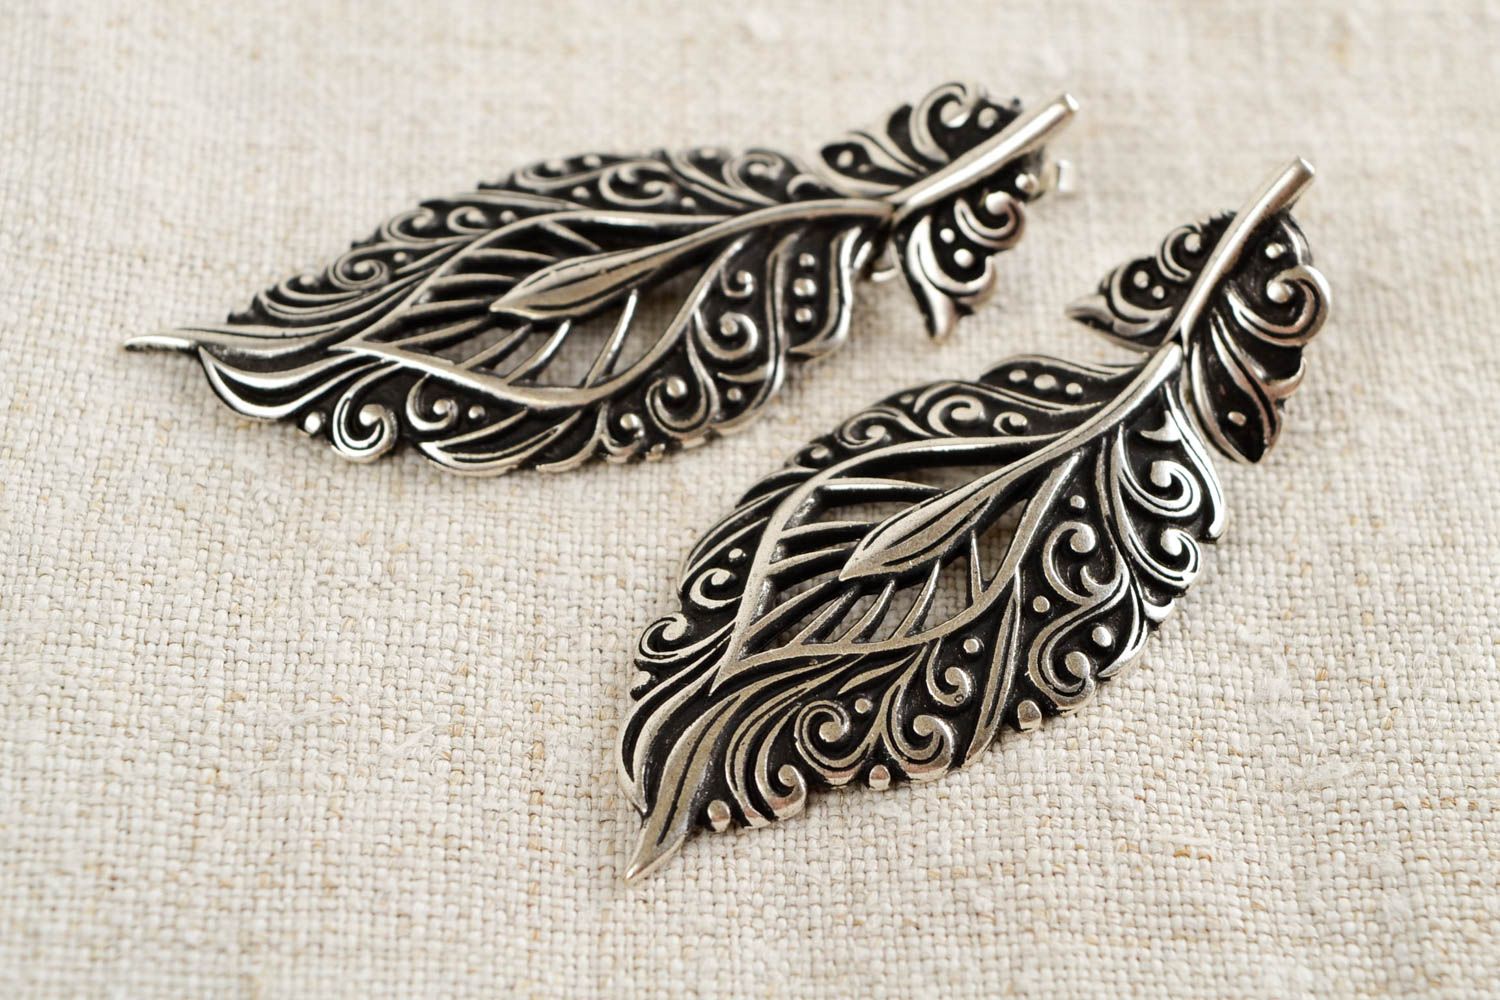 Unusual handmade metal earrings cool earrings for girls metal craft small gifts photo 1